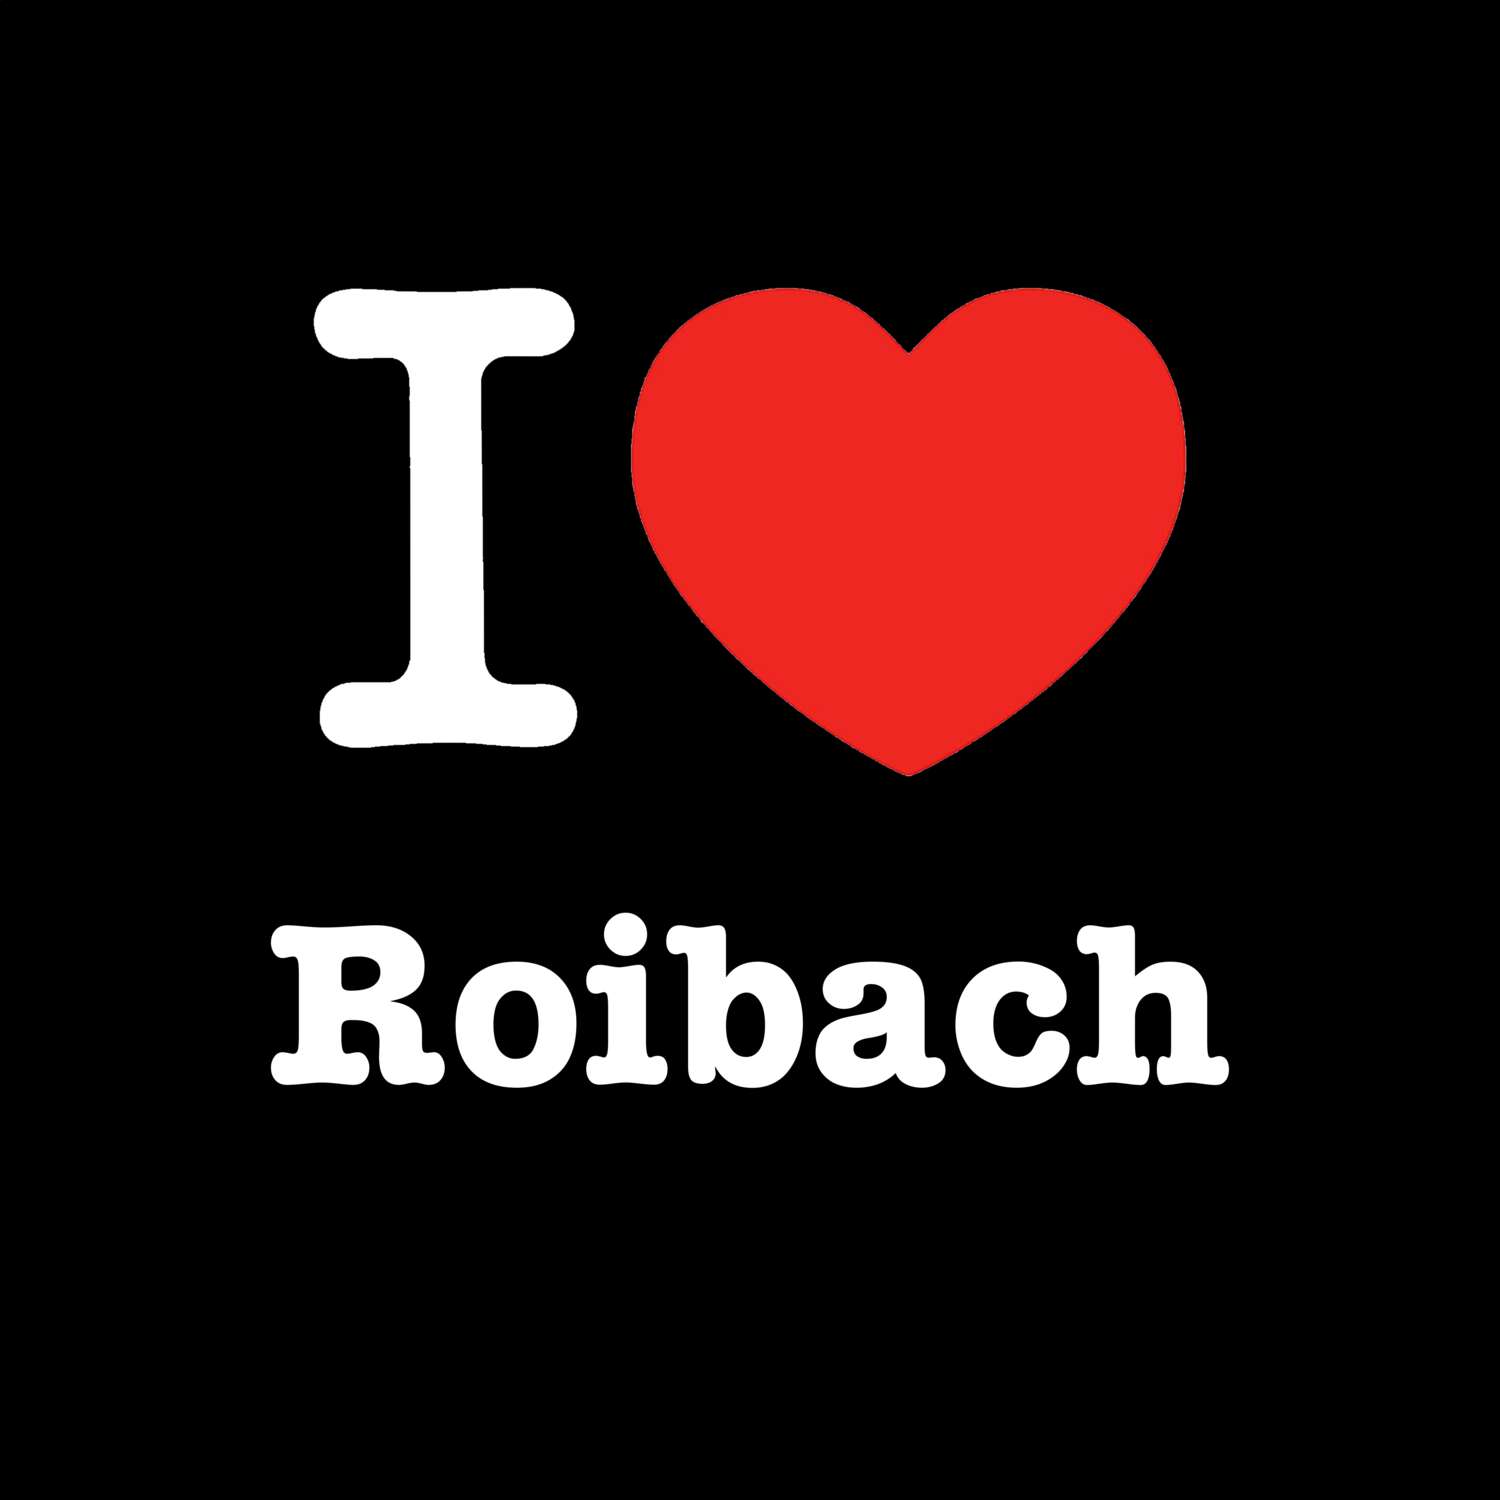 Roibach T-Shirt »I love«